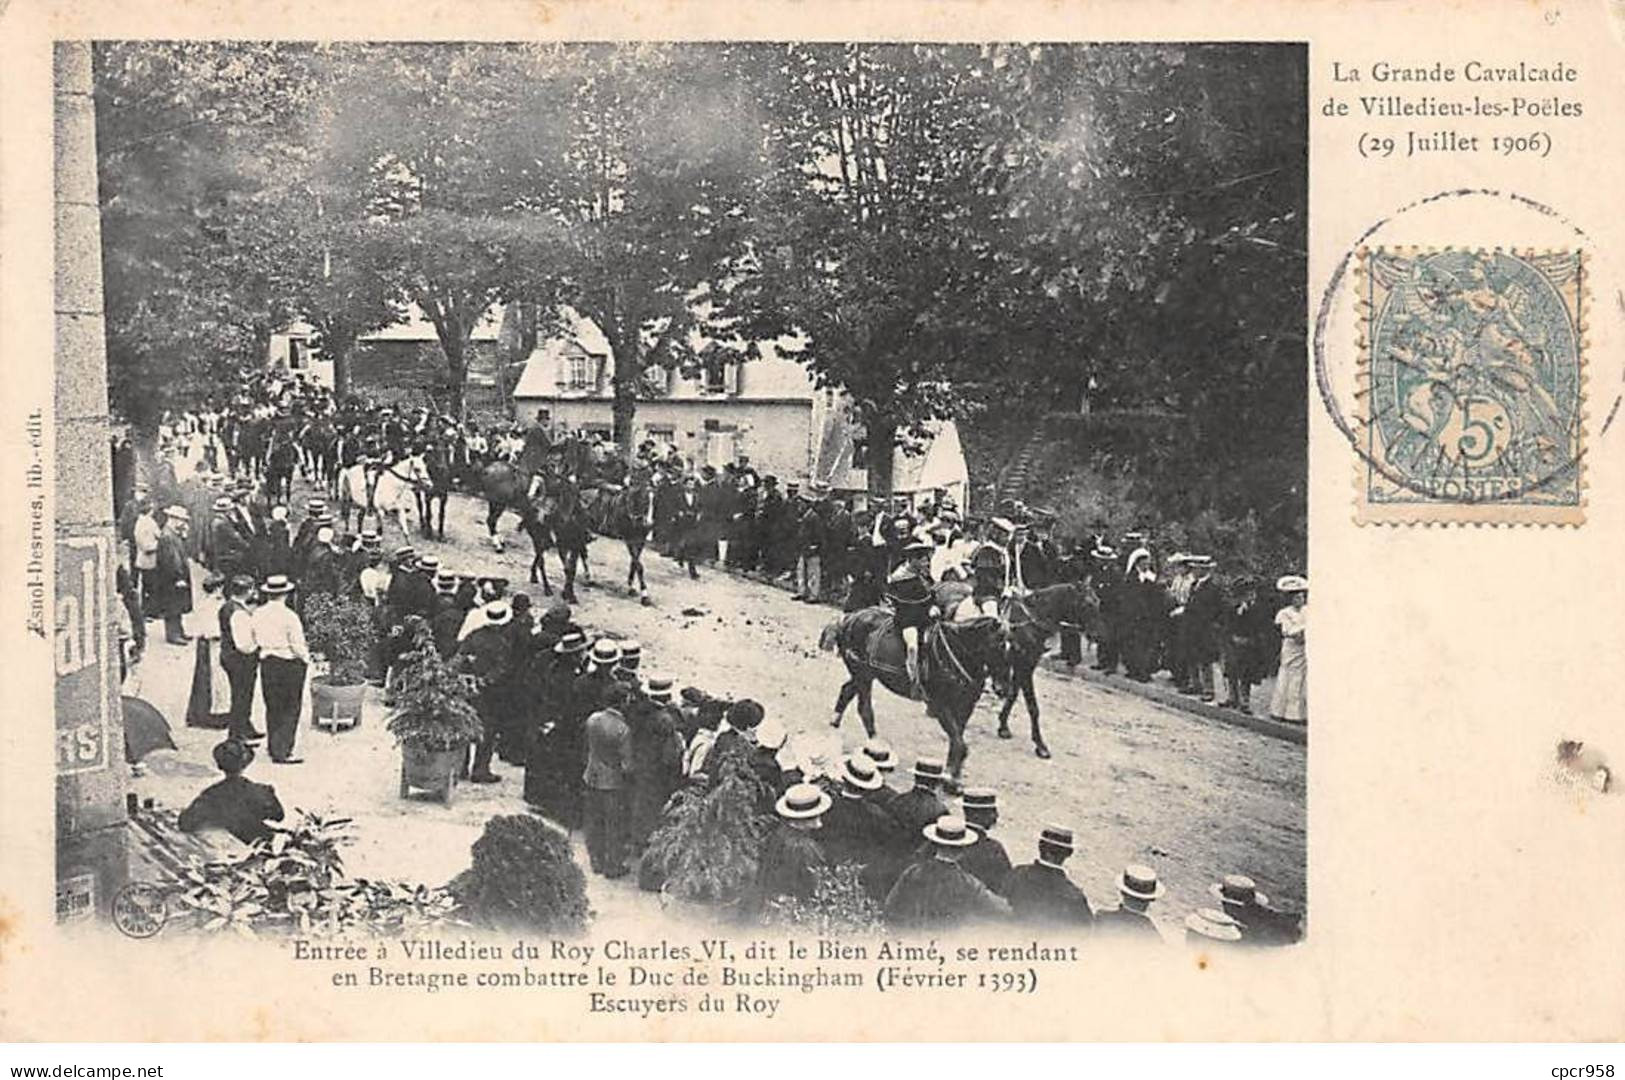 50 - VILLEDIEU LES POELES - SAN51682 - La Grande Cavalcade 29 Juillet 1906 - Entrée De Roy Charles VI... - Villedieu